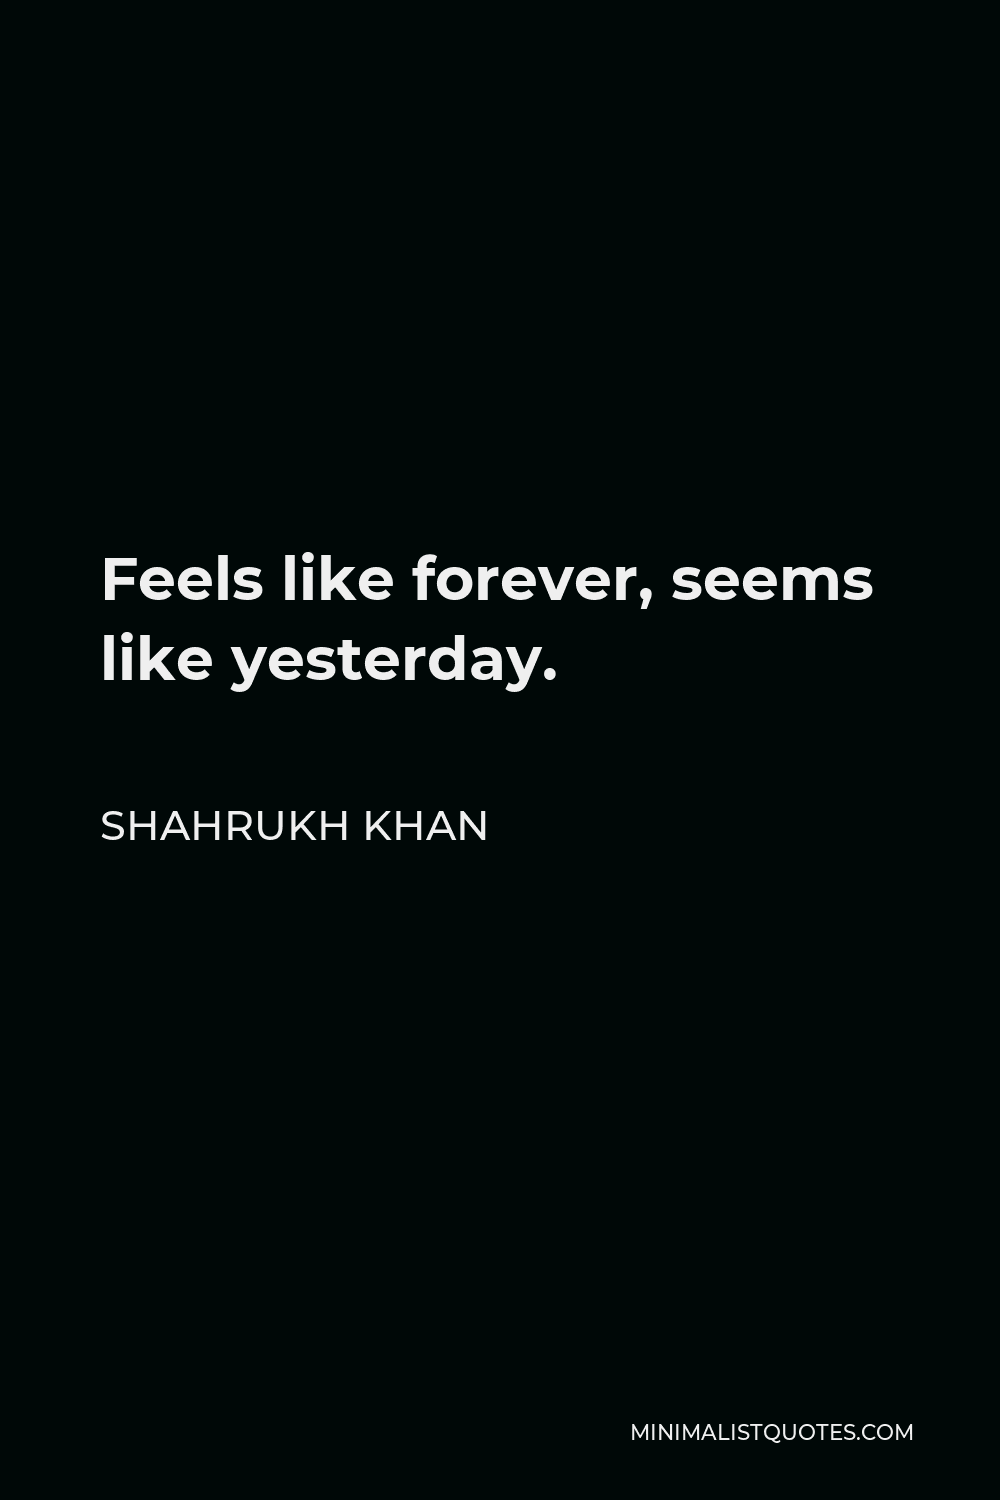 Shahrukh Khan Quote - Feels like forever, seems like yesterday.